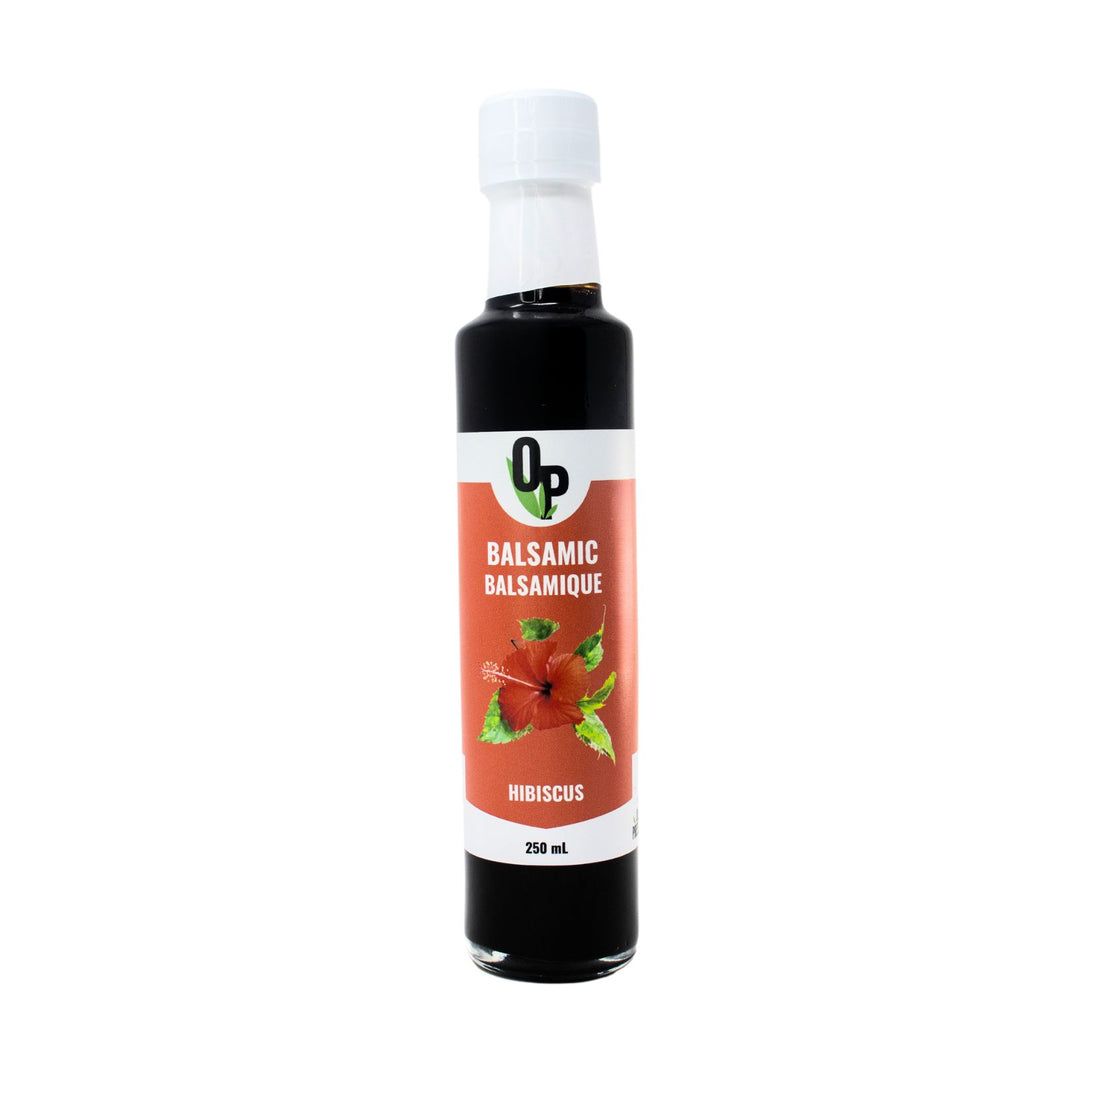 Hibiscus infused dark balsamic vinegar